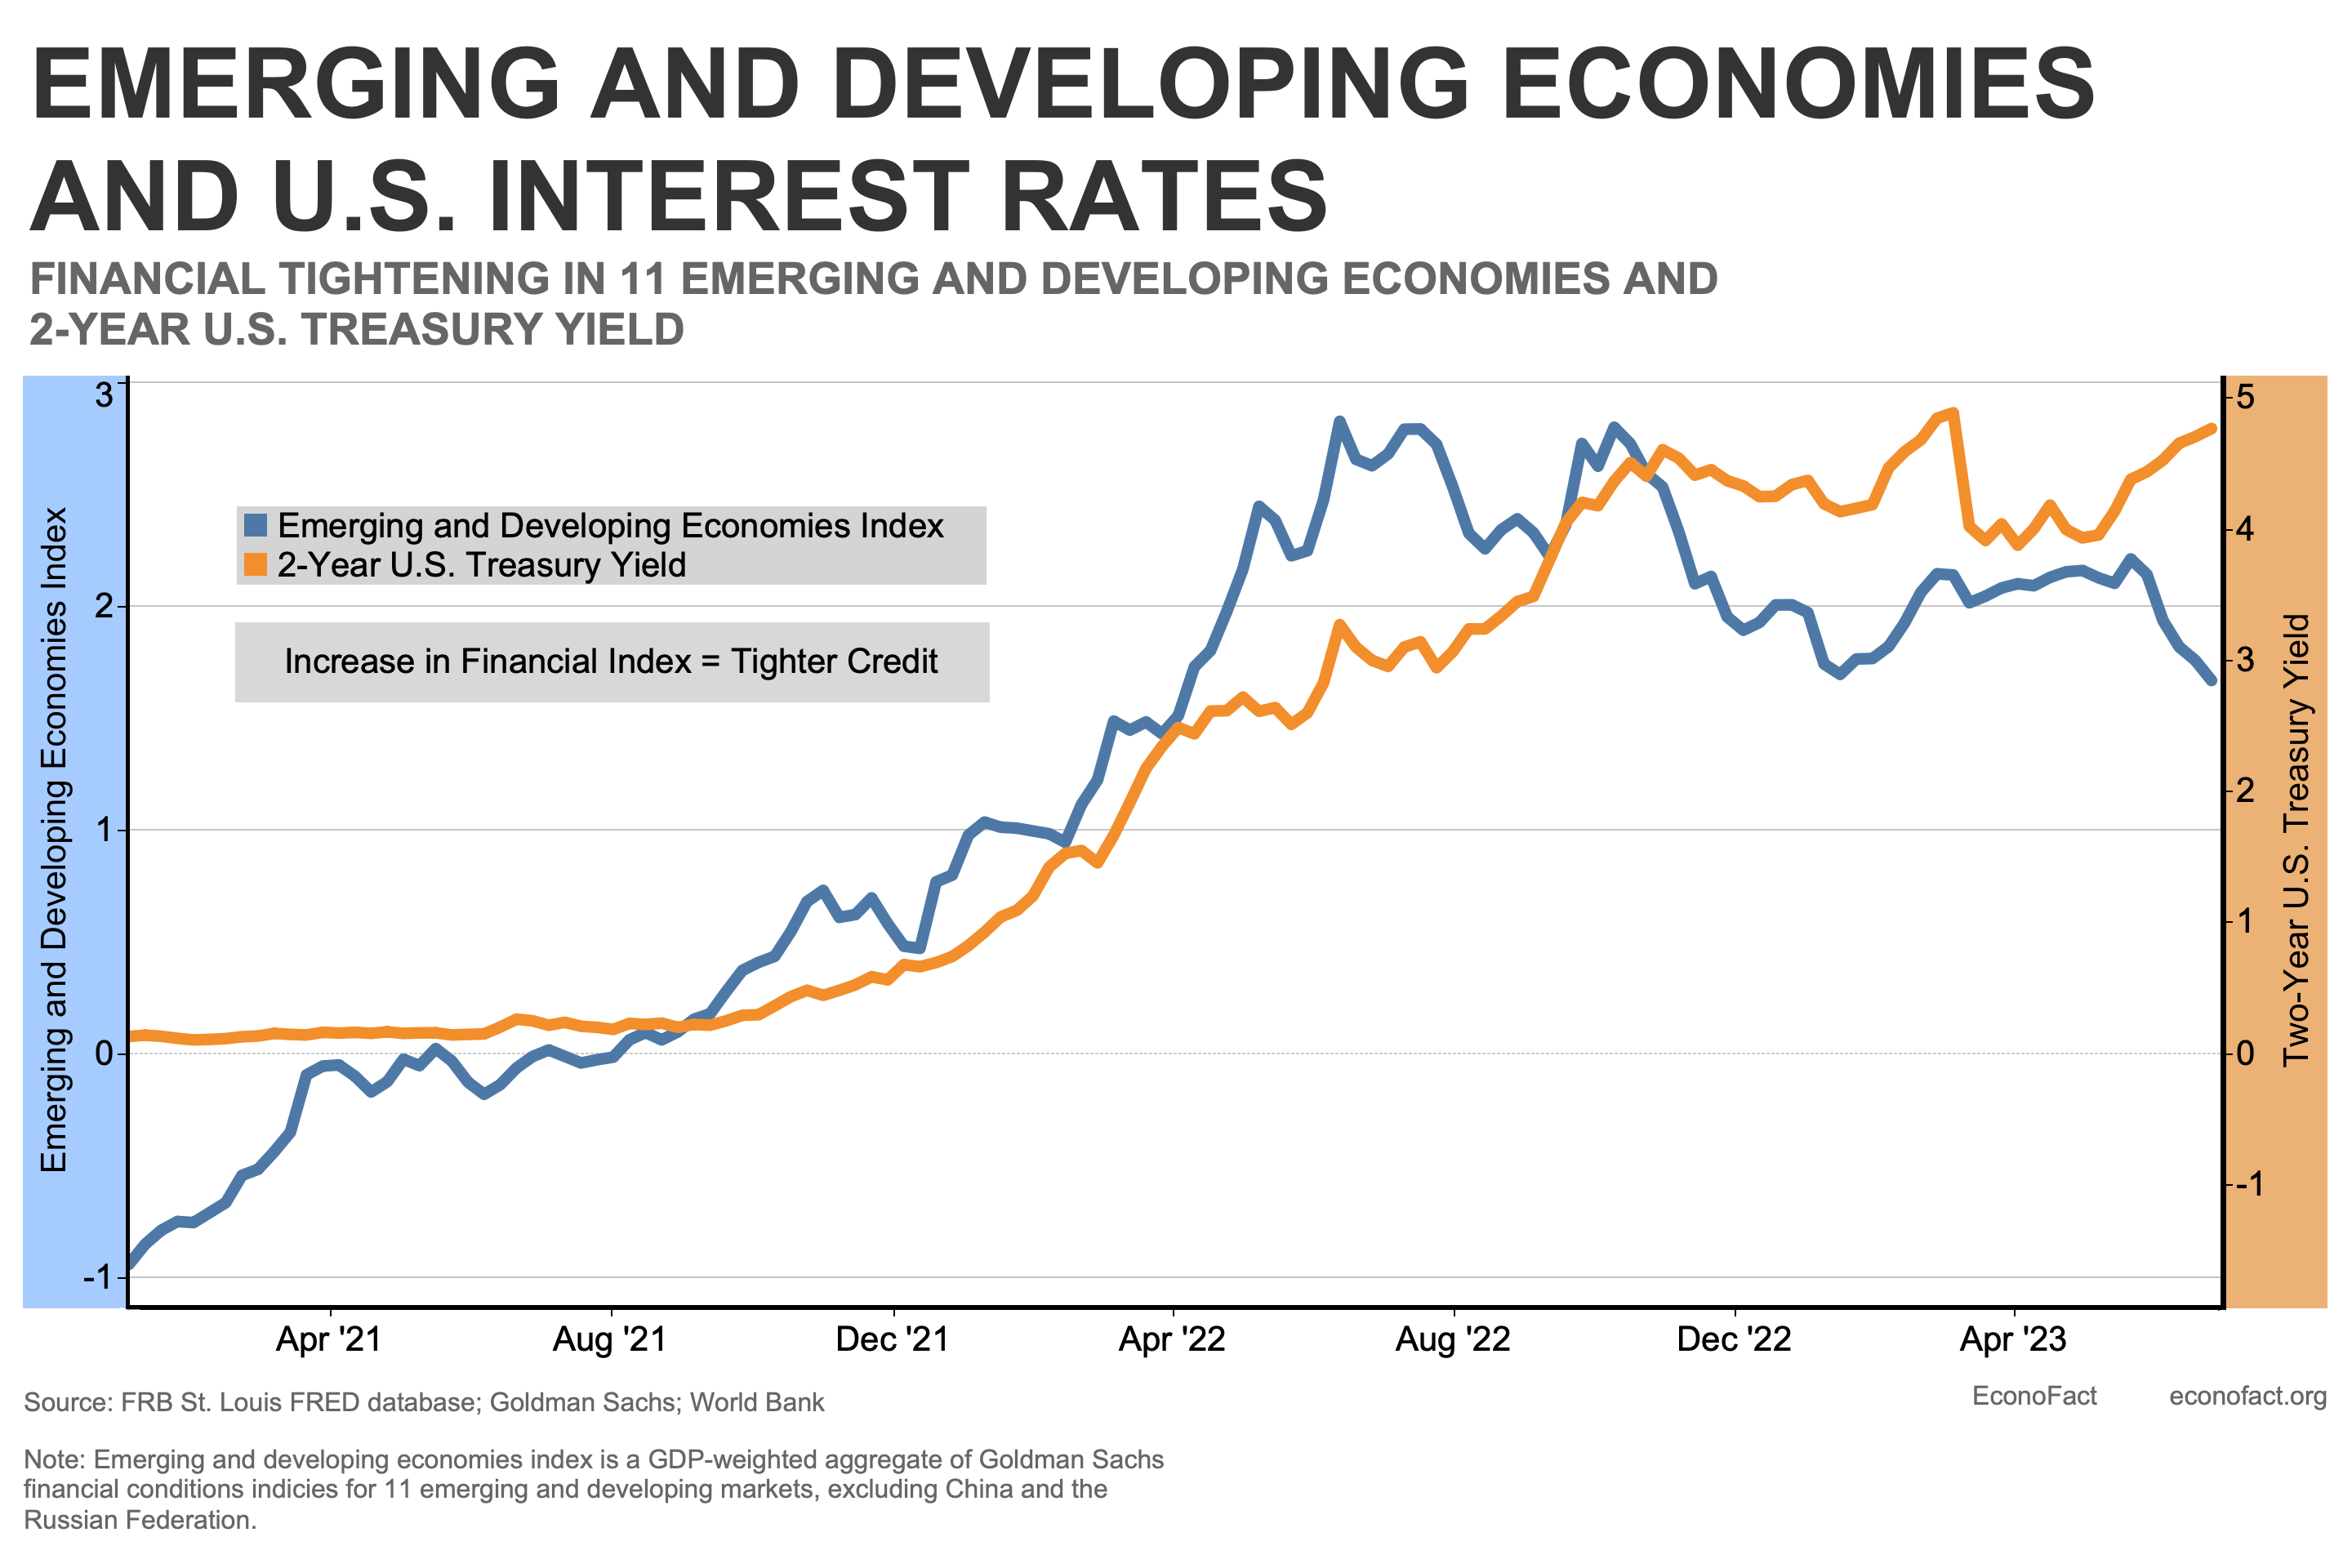 Rising U.S. Interest Rates and Emerging Market Distress